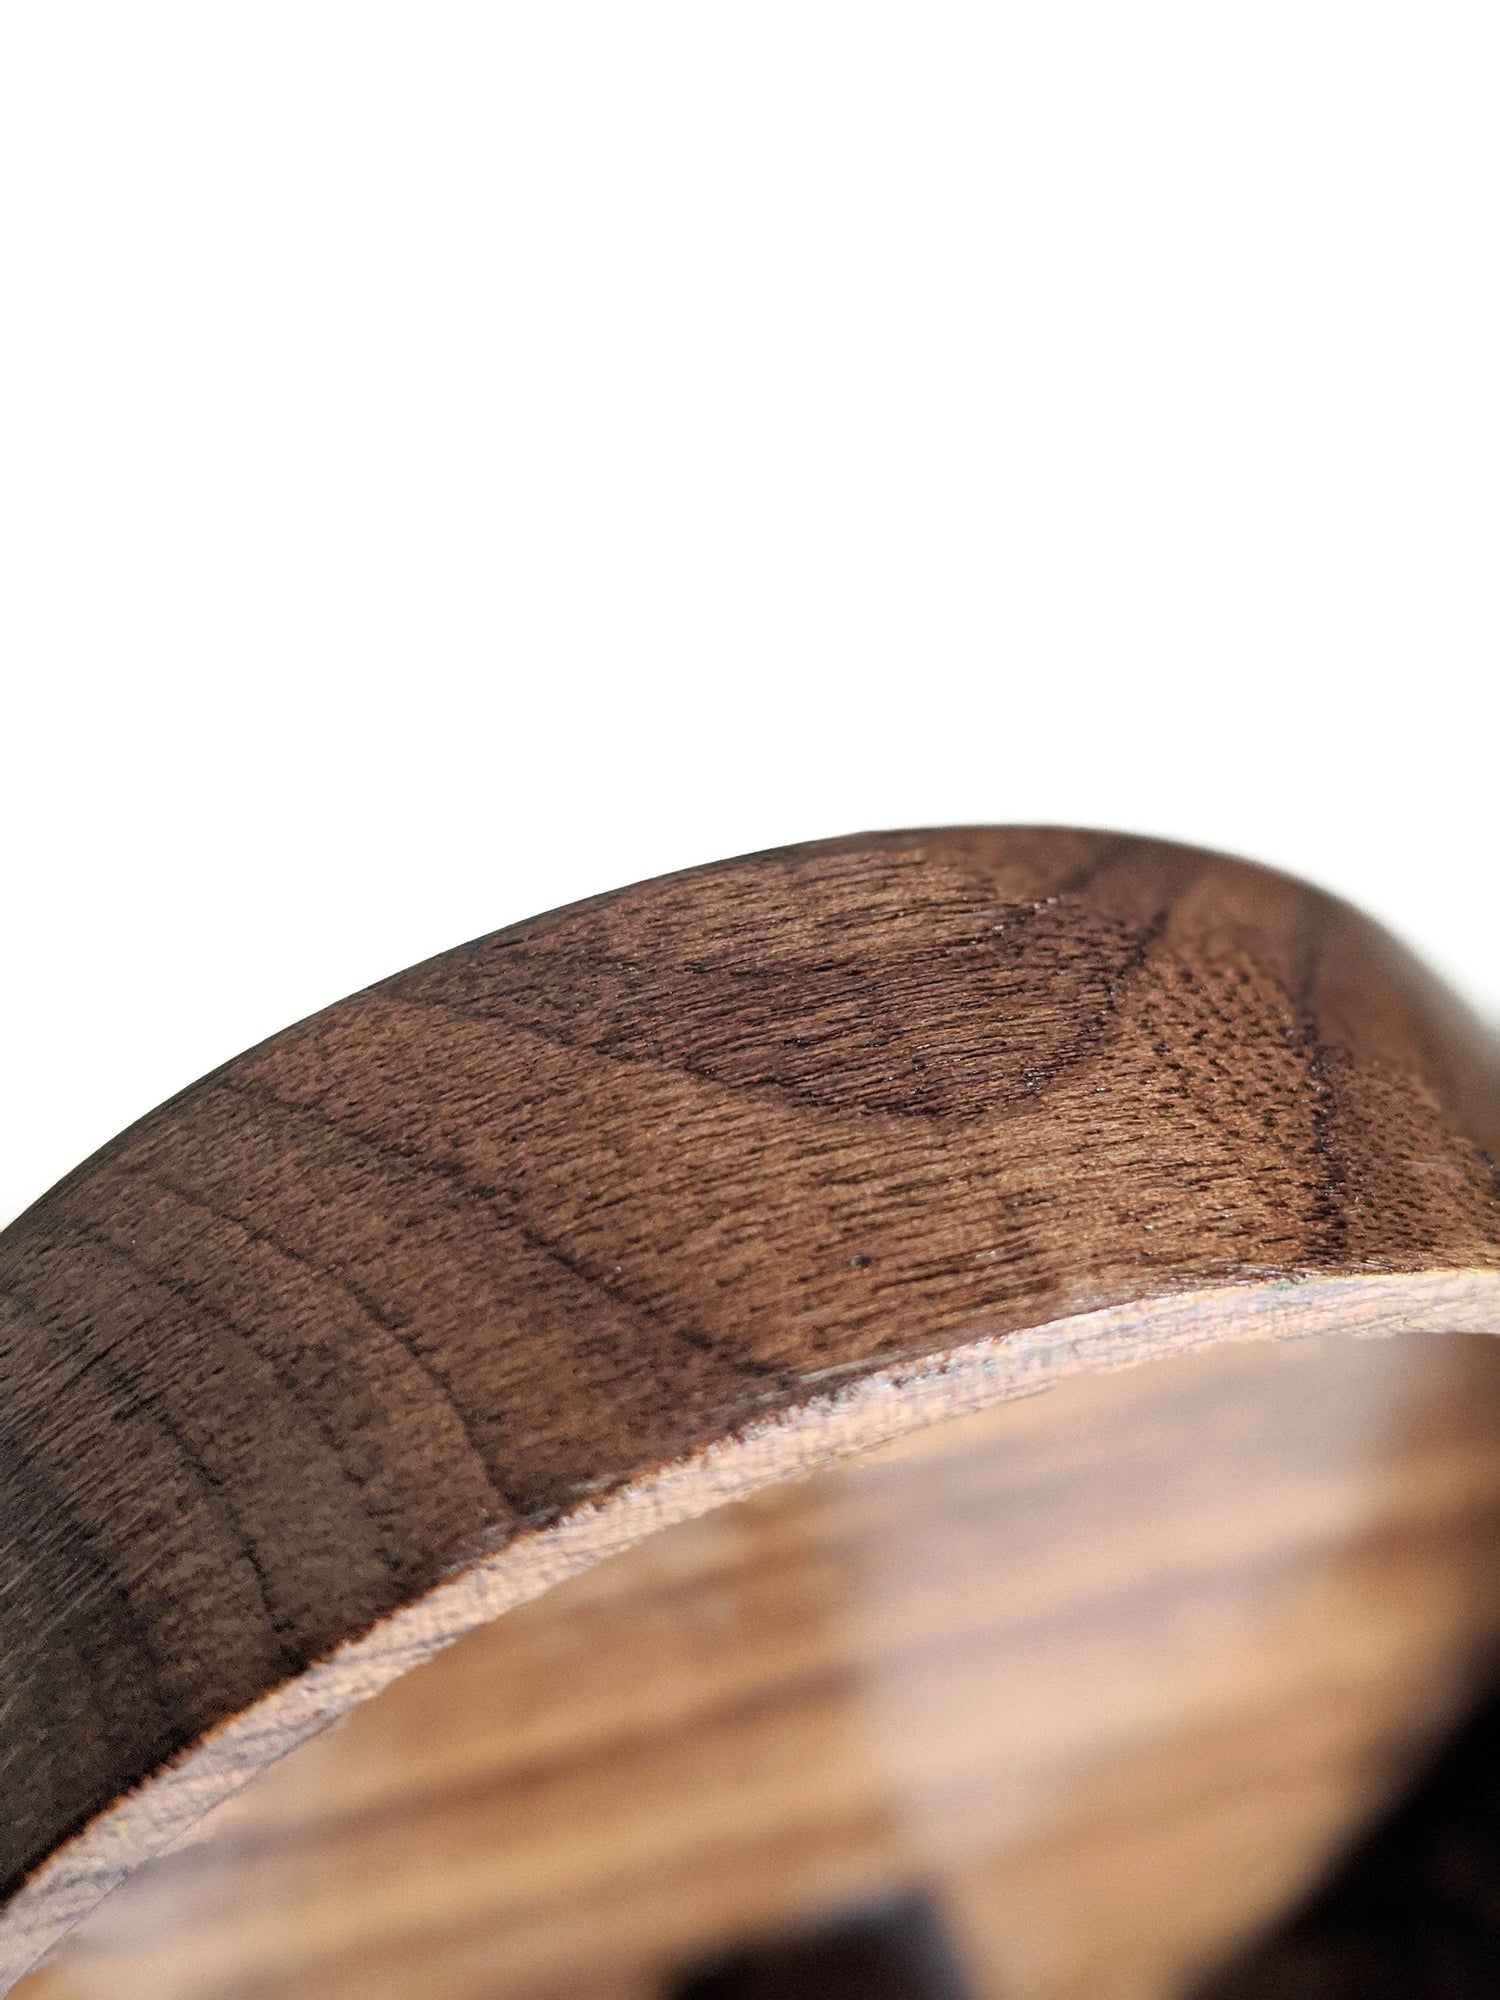 Image of walnut close up